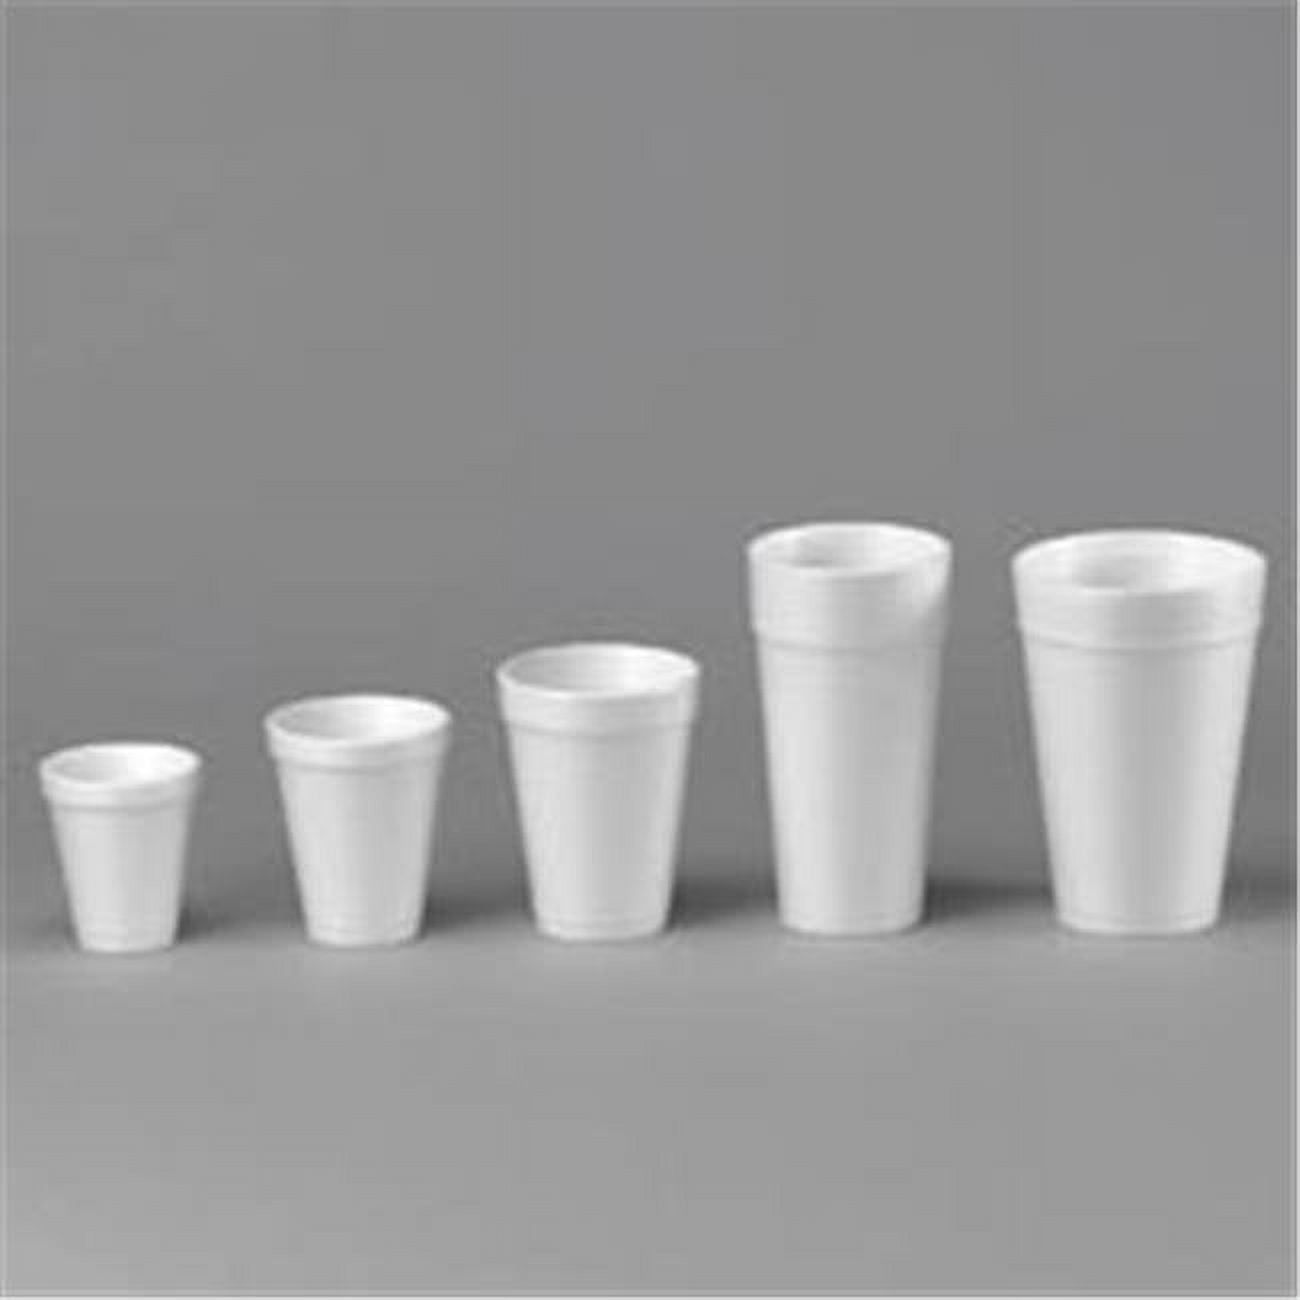 8 oz. Styrofoam Cups